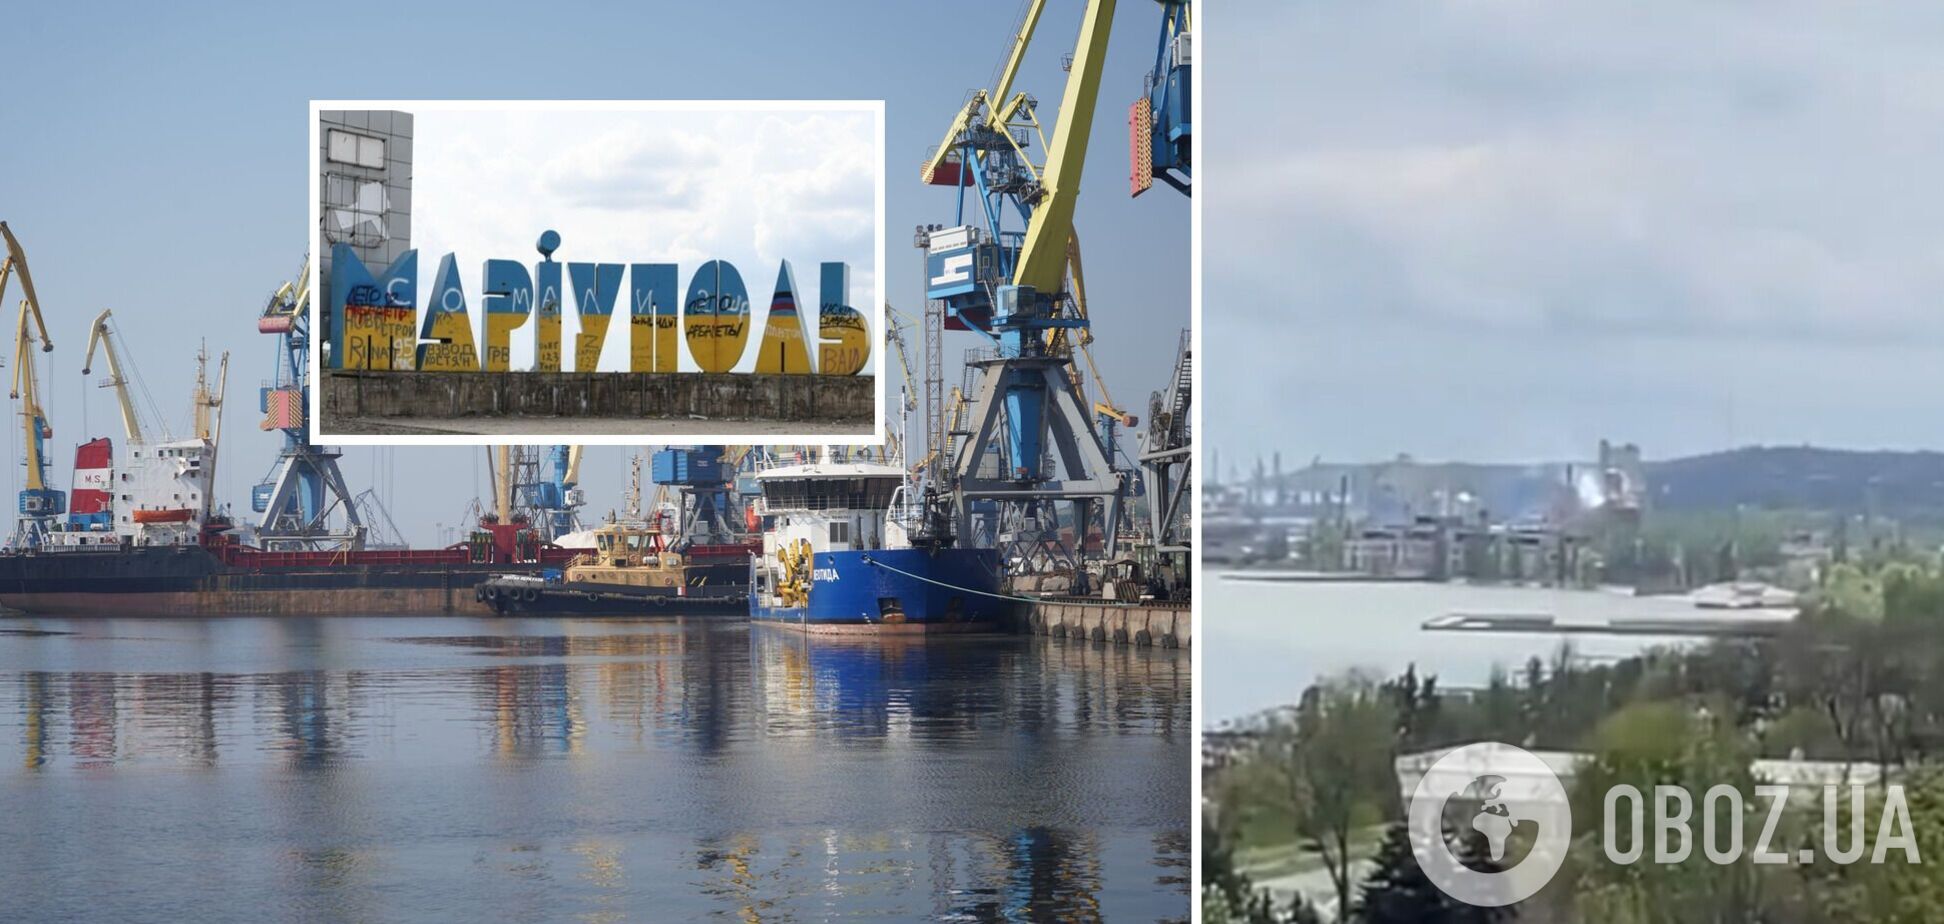 Українське зерно не поїде в Росію: в Маріупольському порту горить термінал. Відео